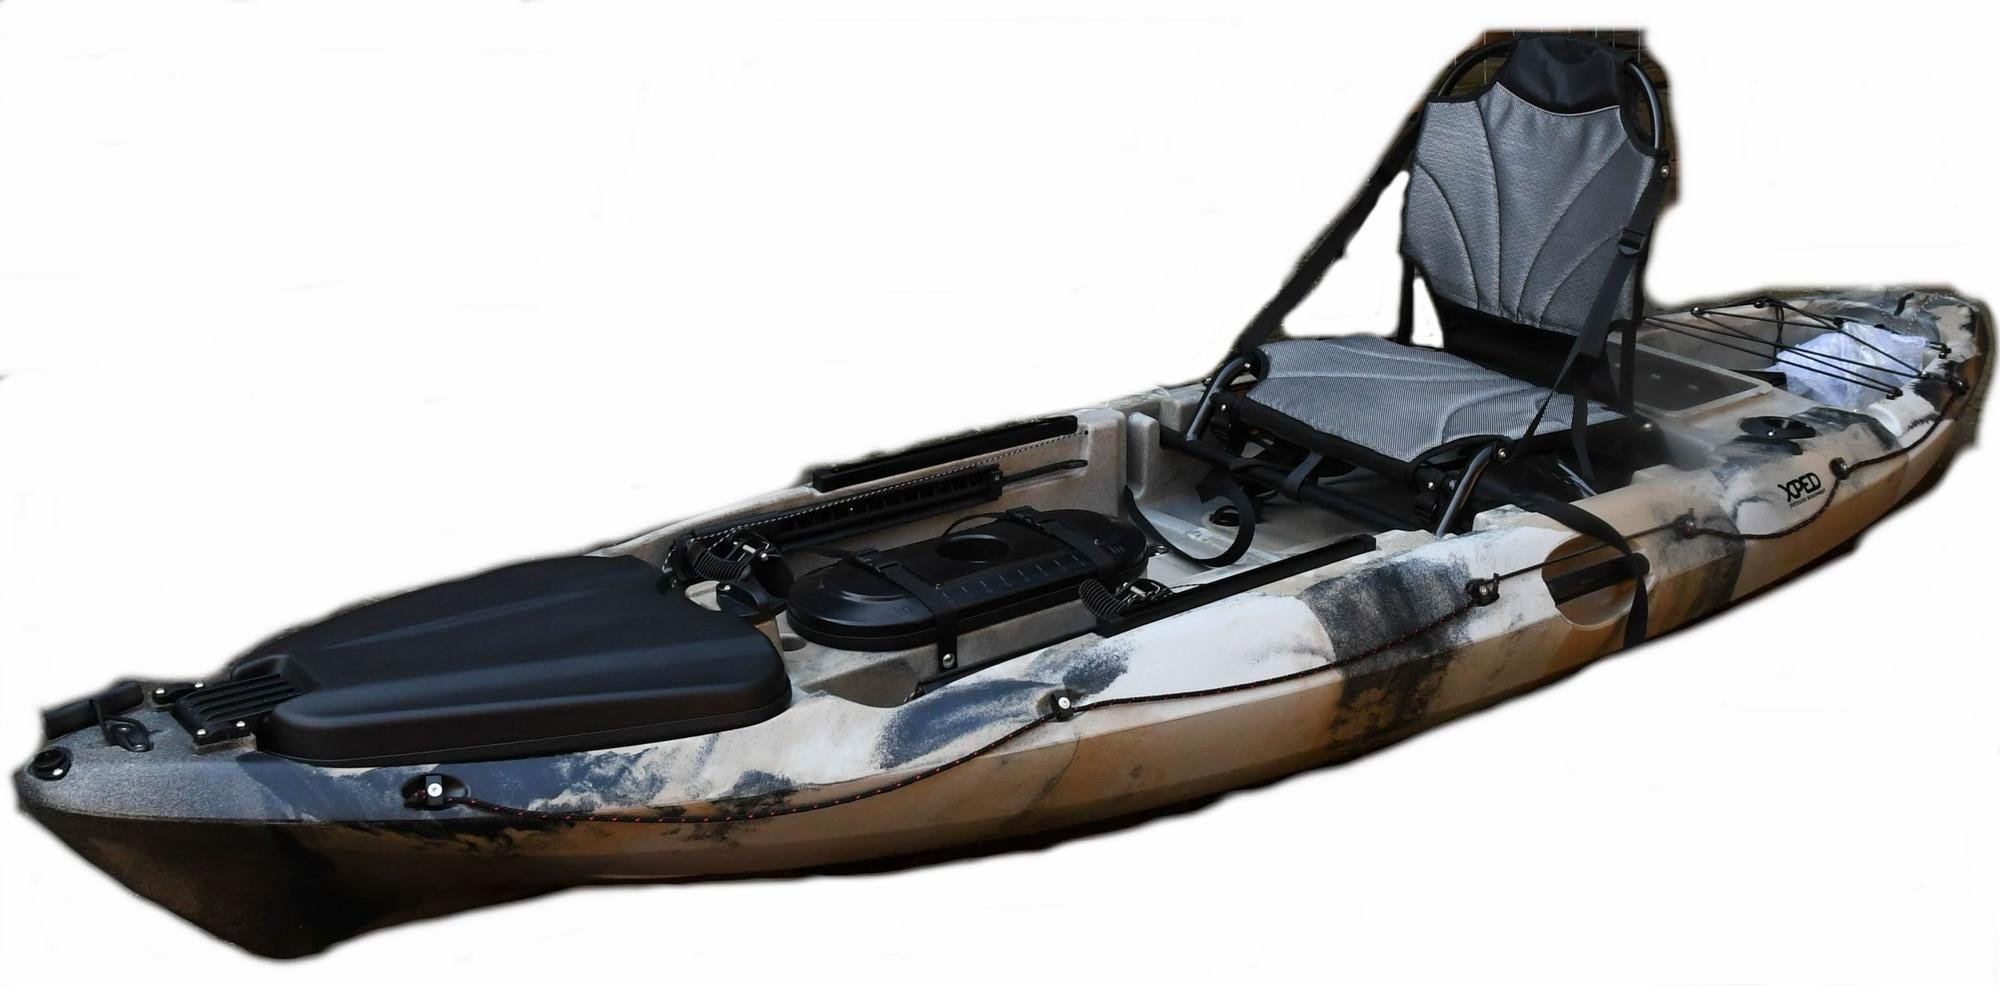 Kayak de Pesca Big Dace Pro 10 Angler - Color: Gris/Beige/Blanco